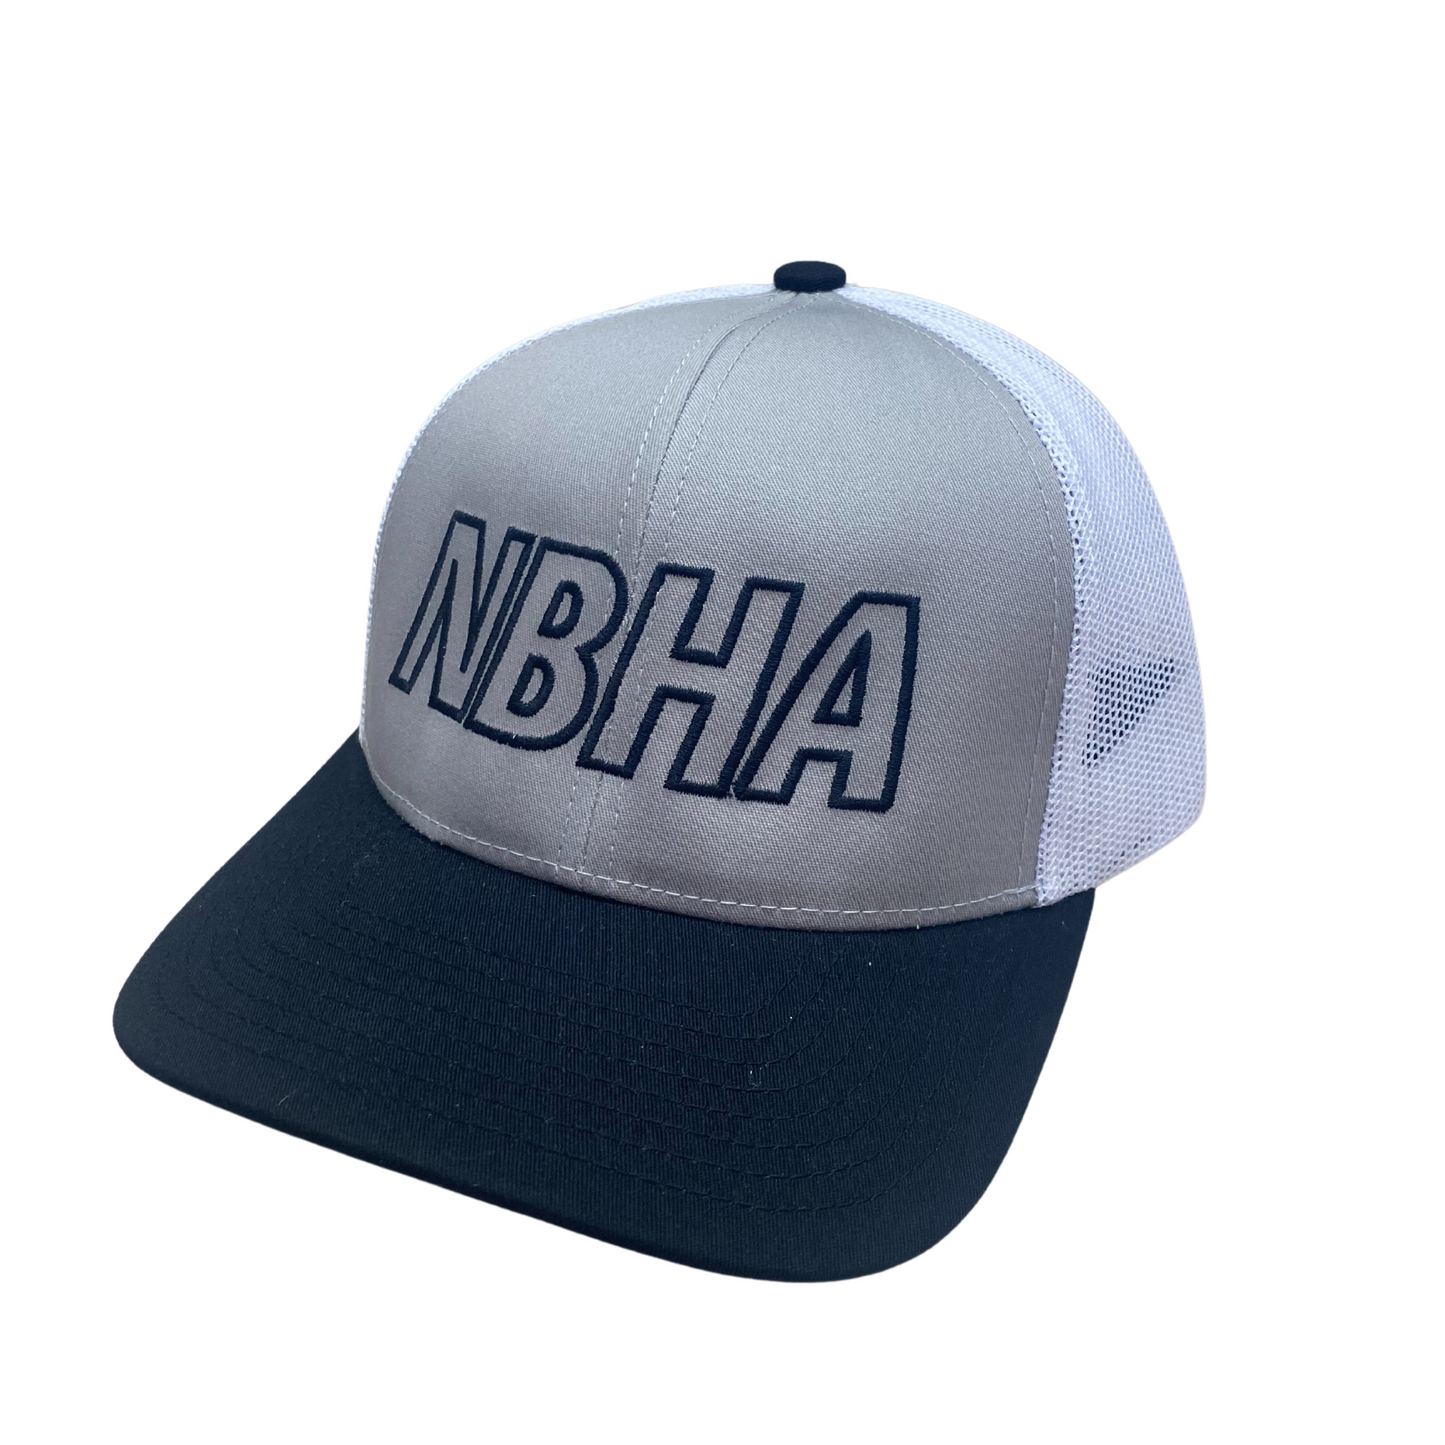 NBHA Trucker Hat : White/Grey/Black